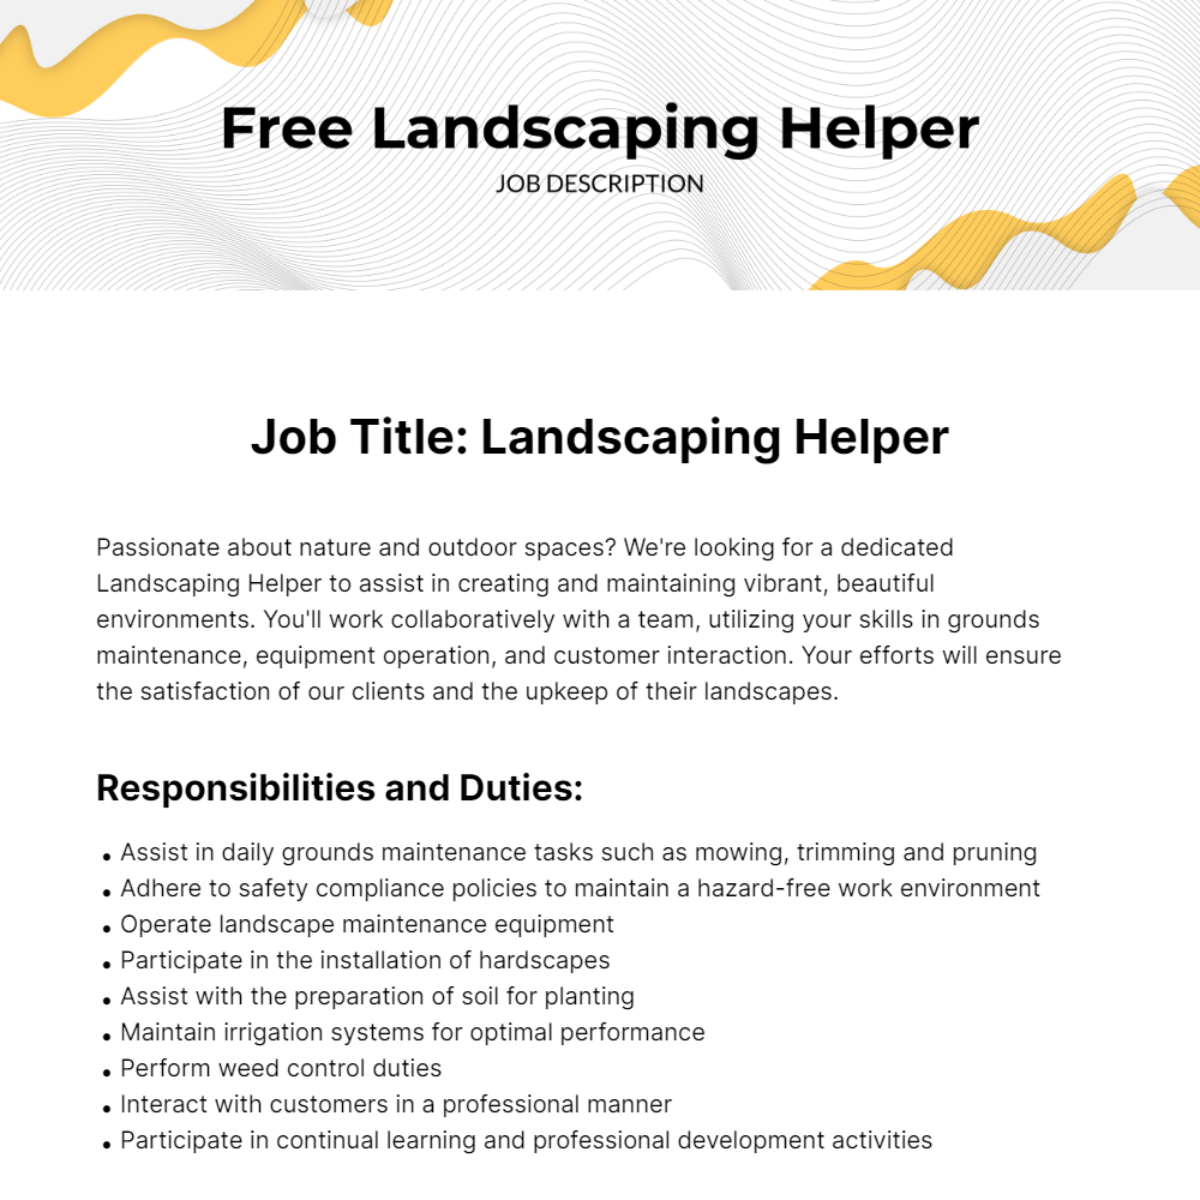 Free Landscaping Helper Job Description Template